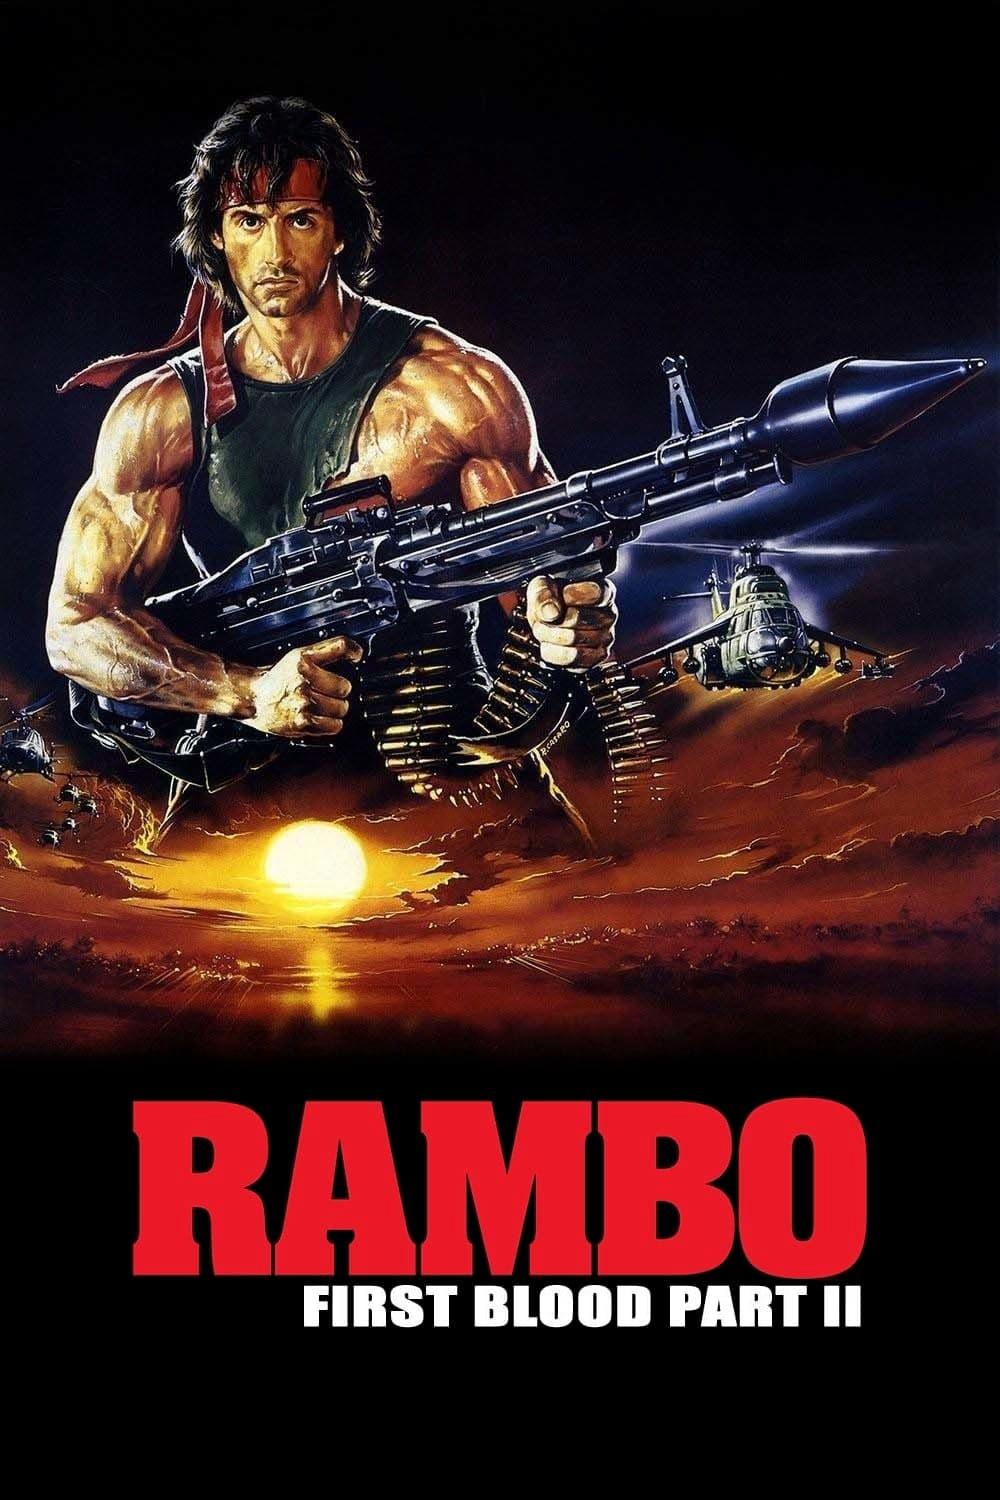 Poster Phim Chiến Binh Rambo 2 (Rambo: First Blood Part II)